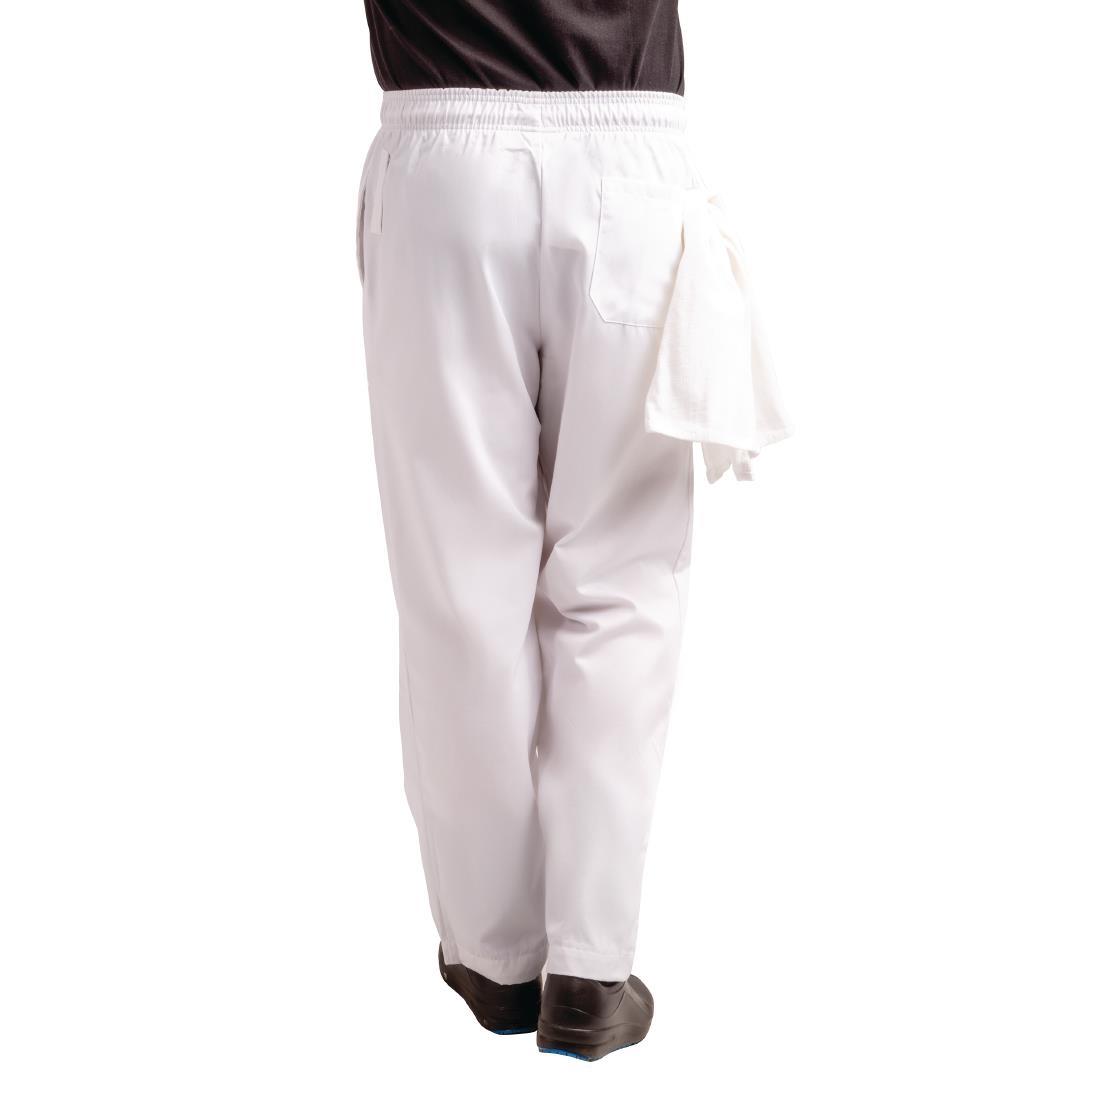 Whites Easyfit Trousers Teflon White S - A575T-S  - 6